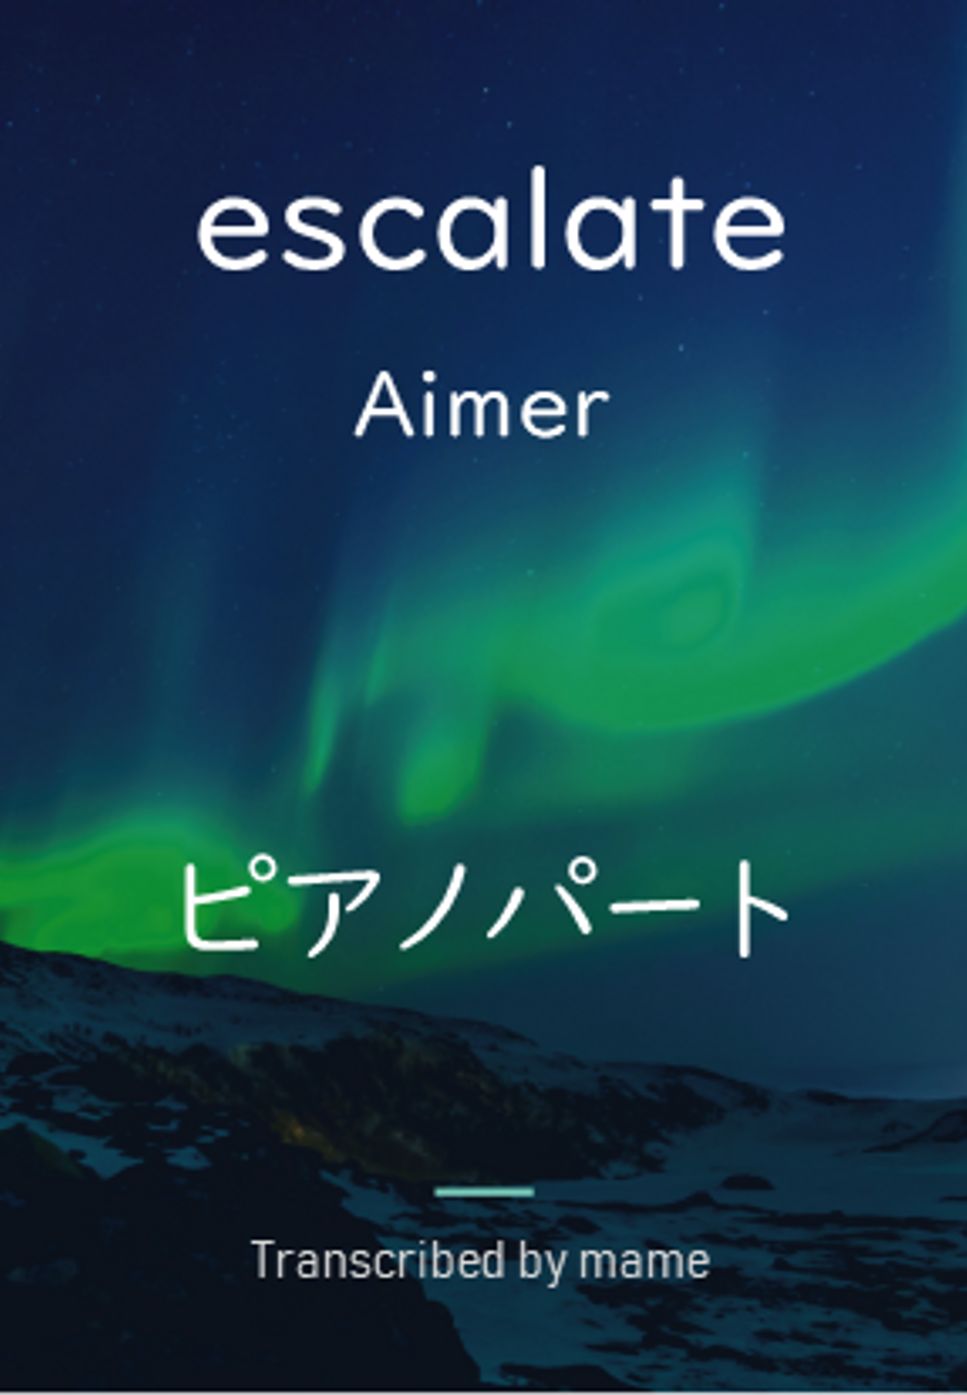 Aimer - escalate (ピアノパート) by mame